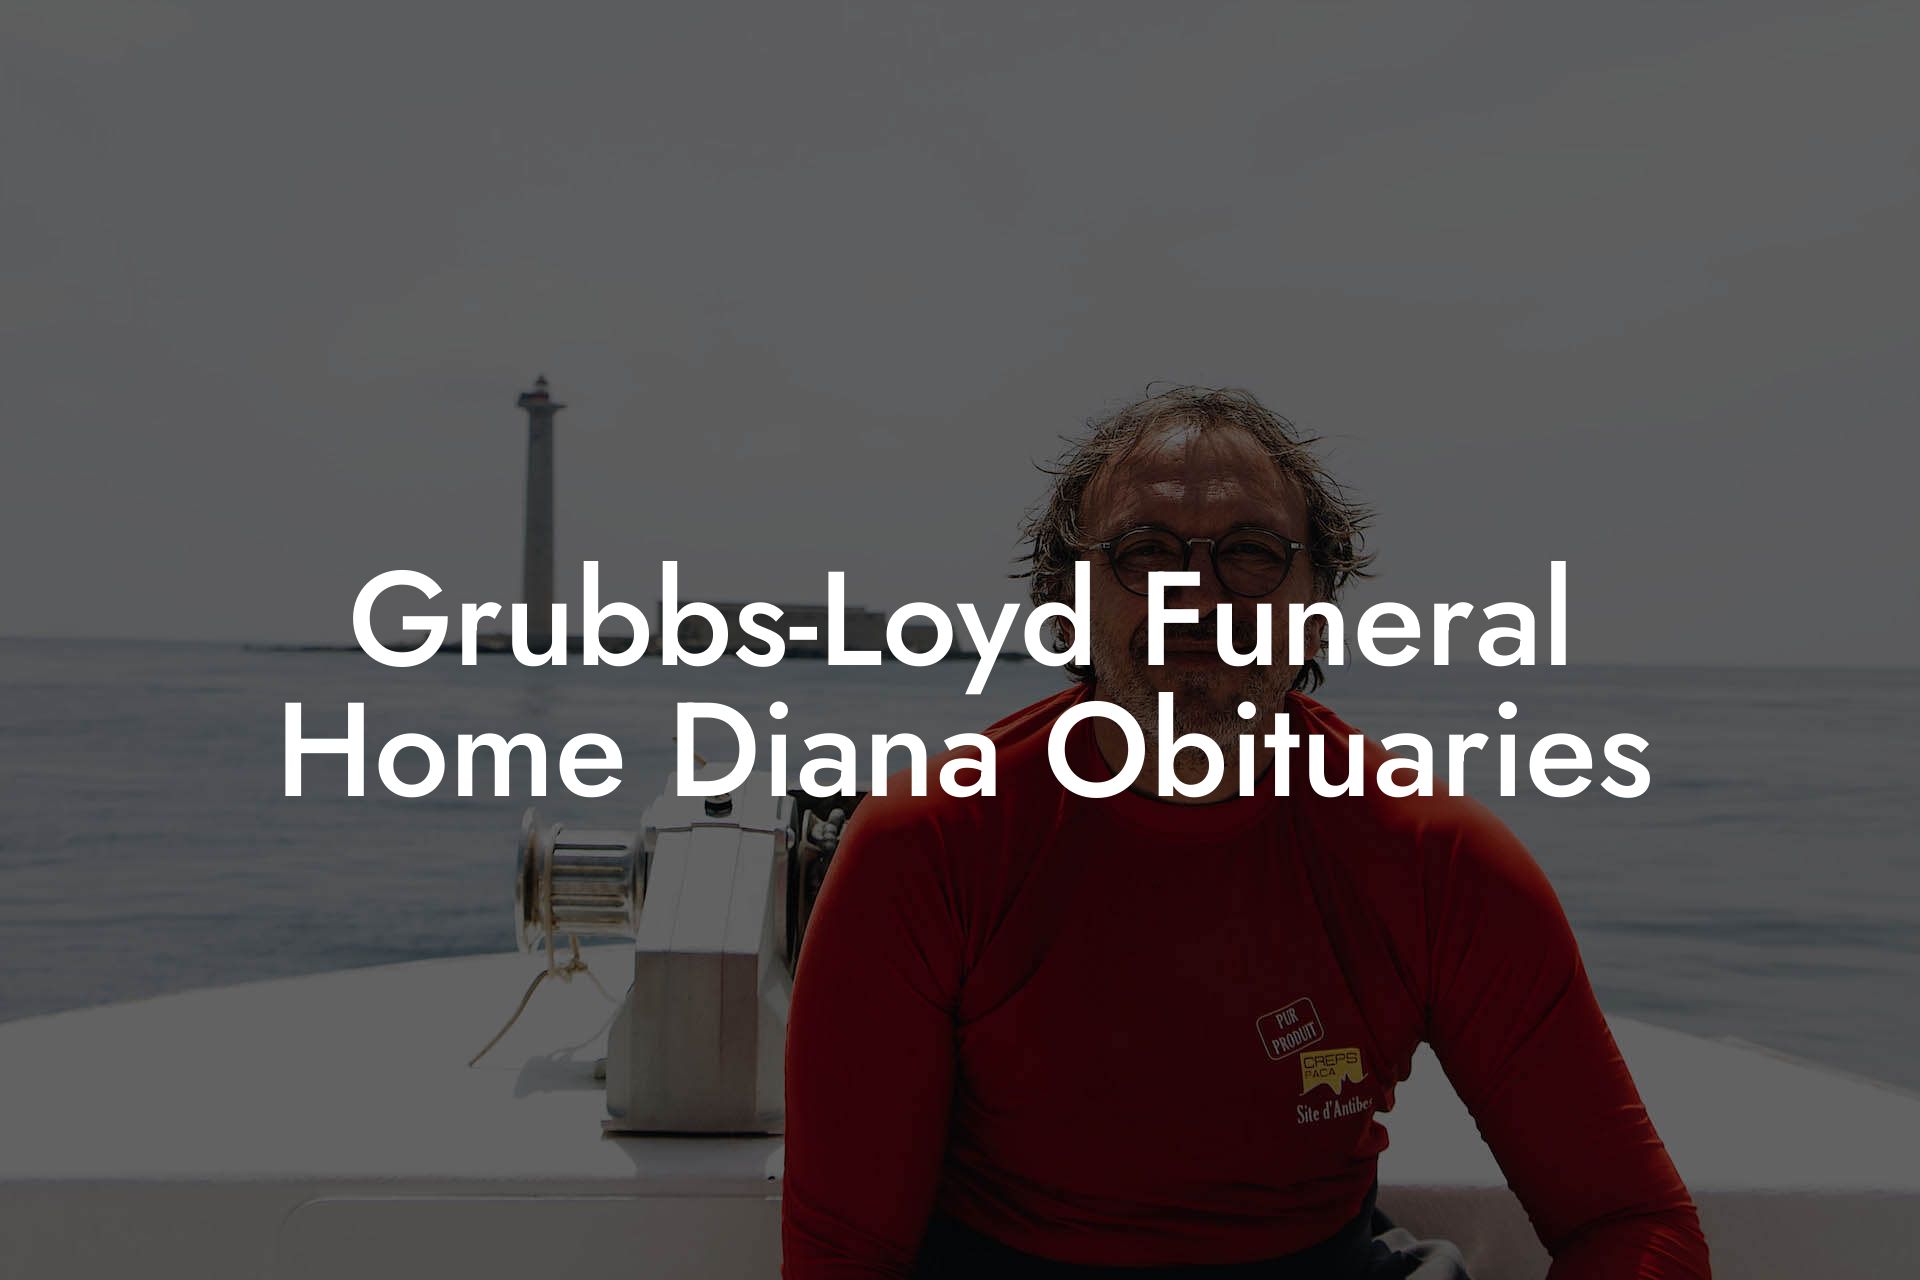 Grubbs-Loyd Funeral Home Diana Obituaries